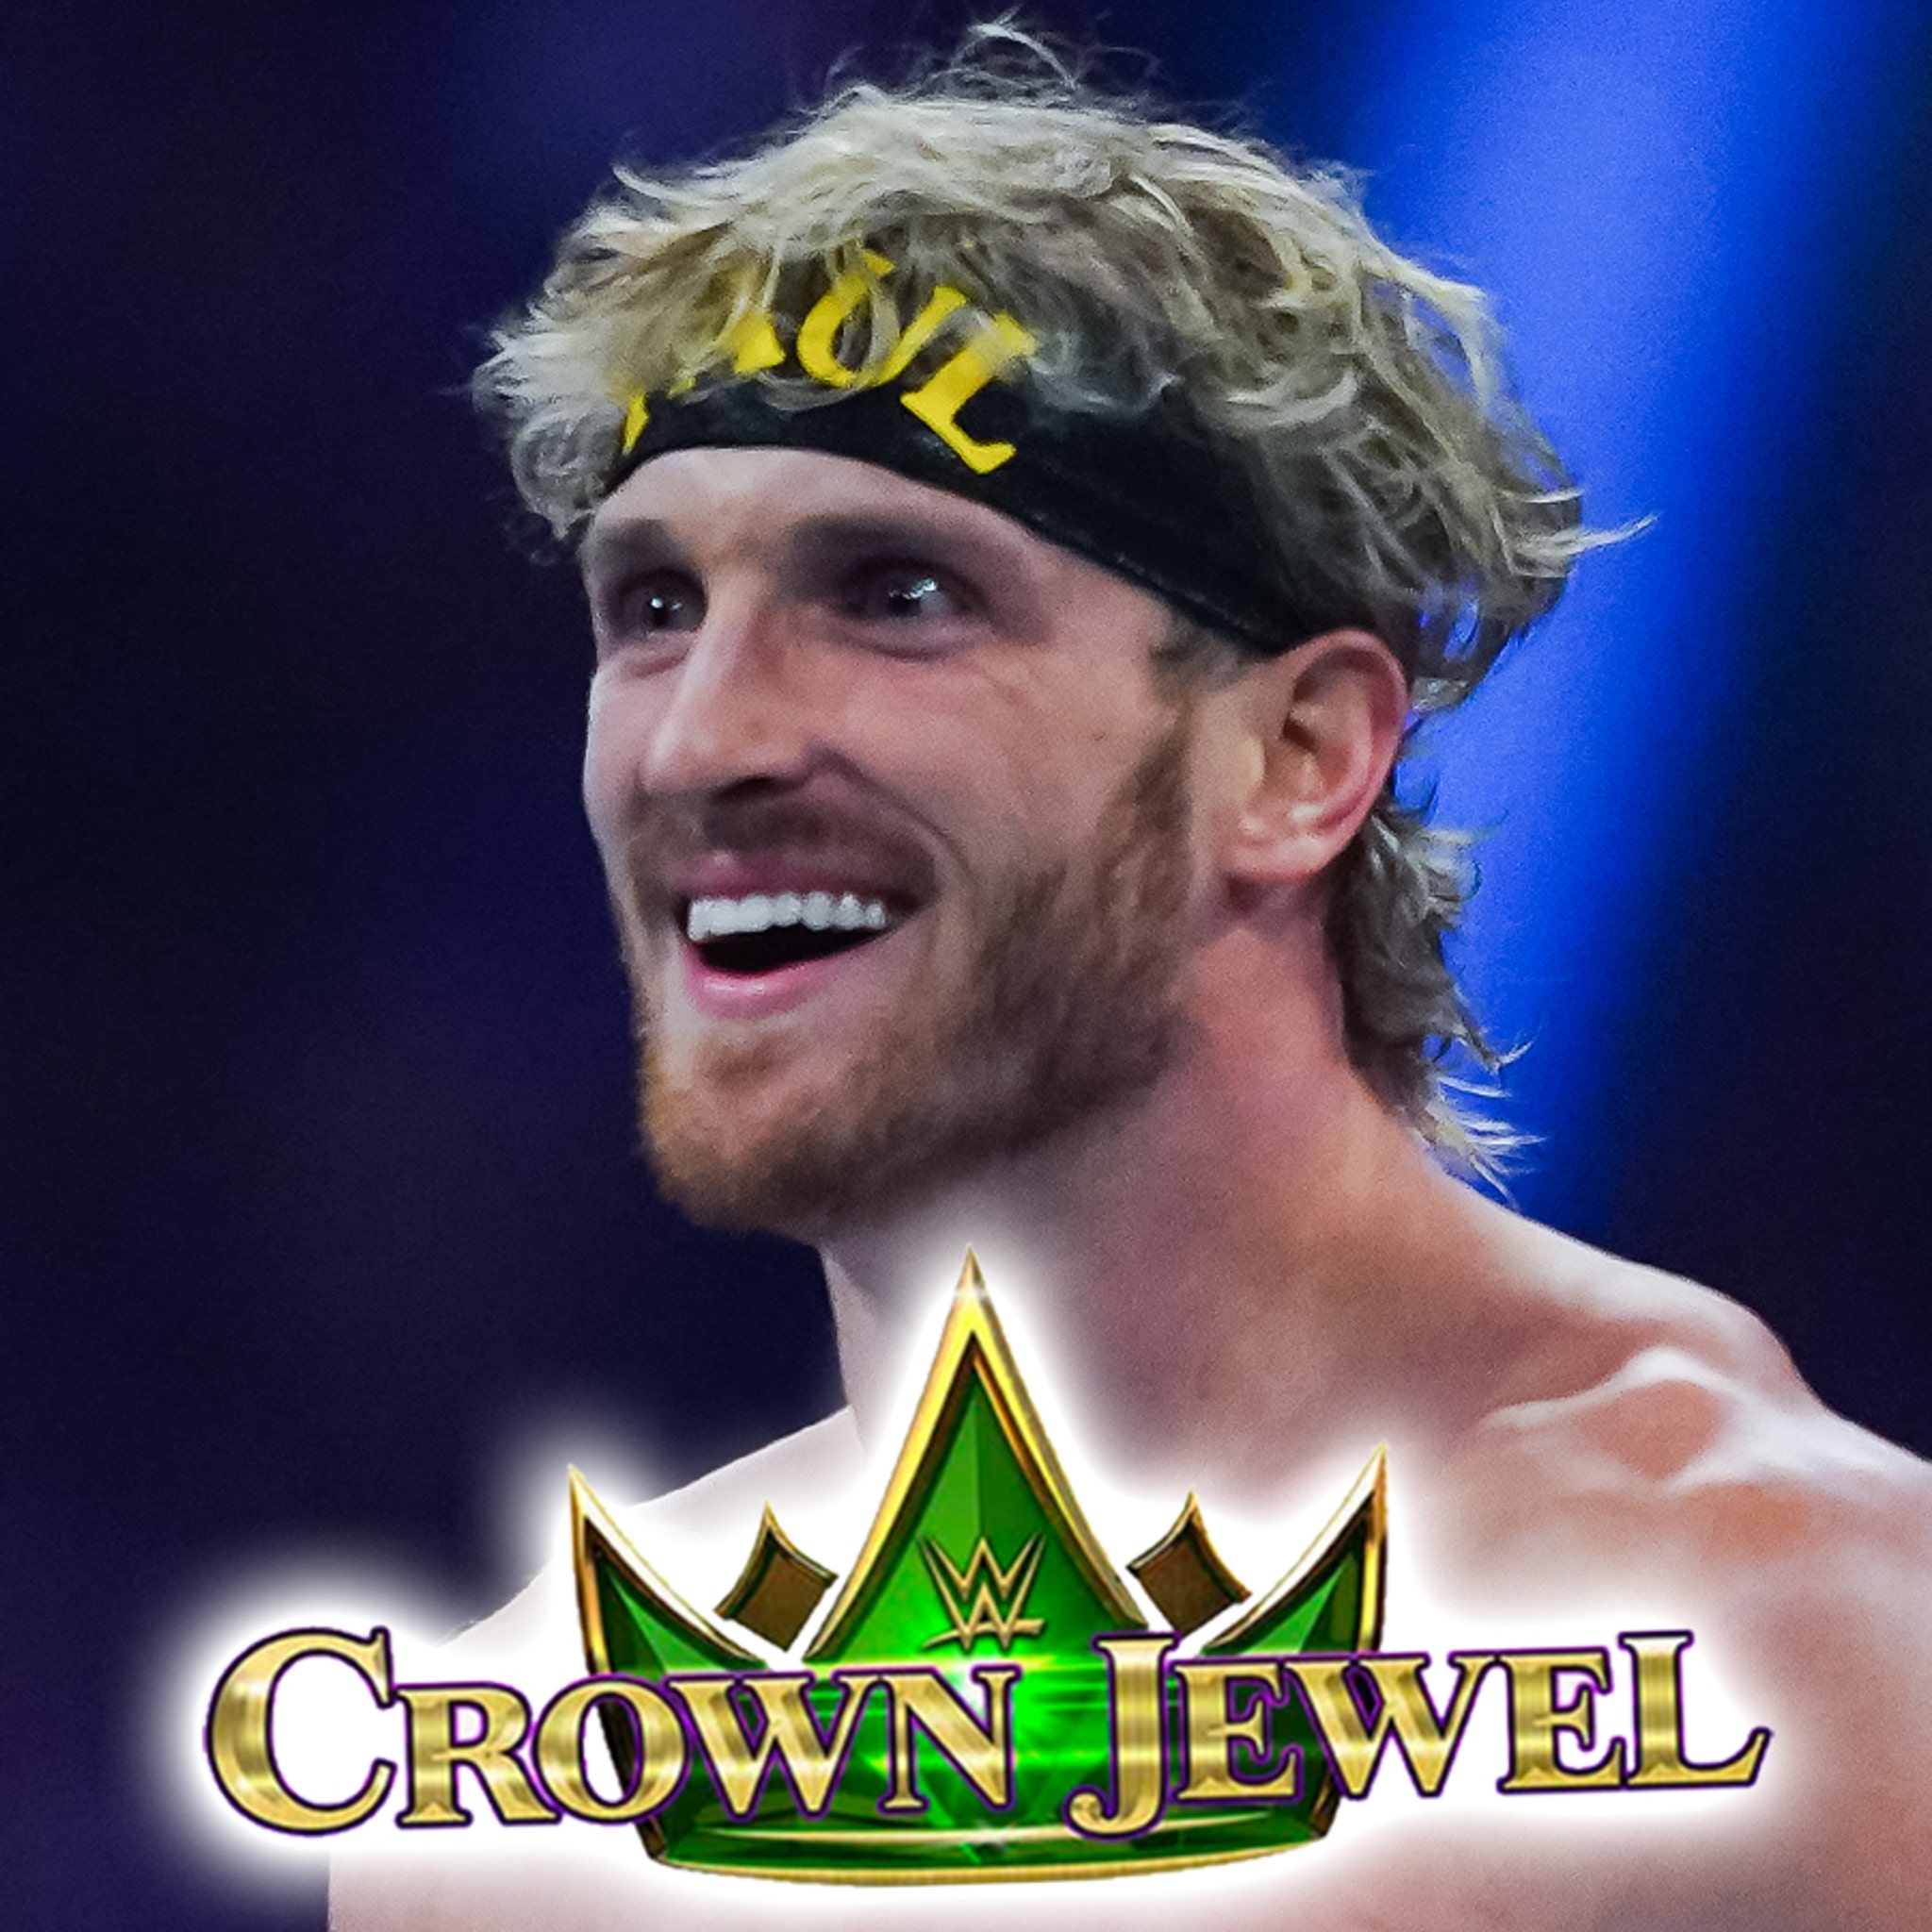 Logan Paul Becomes WWE's U.S. Champion After Winning Crown Jewel Event